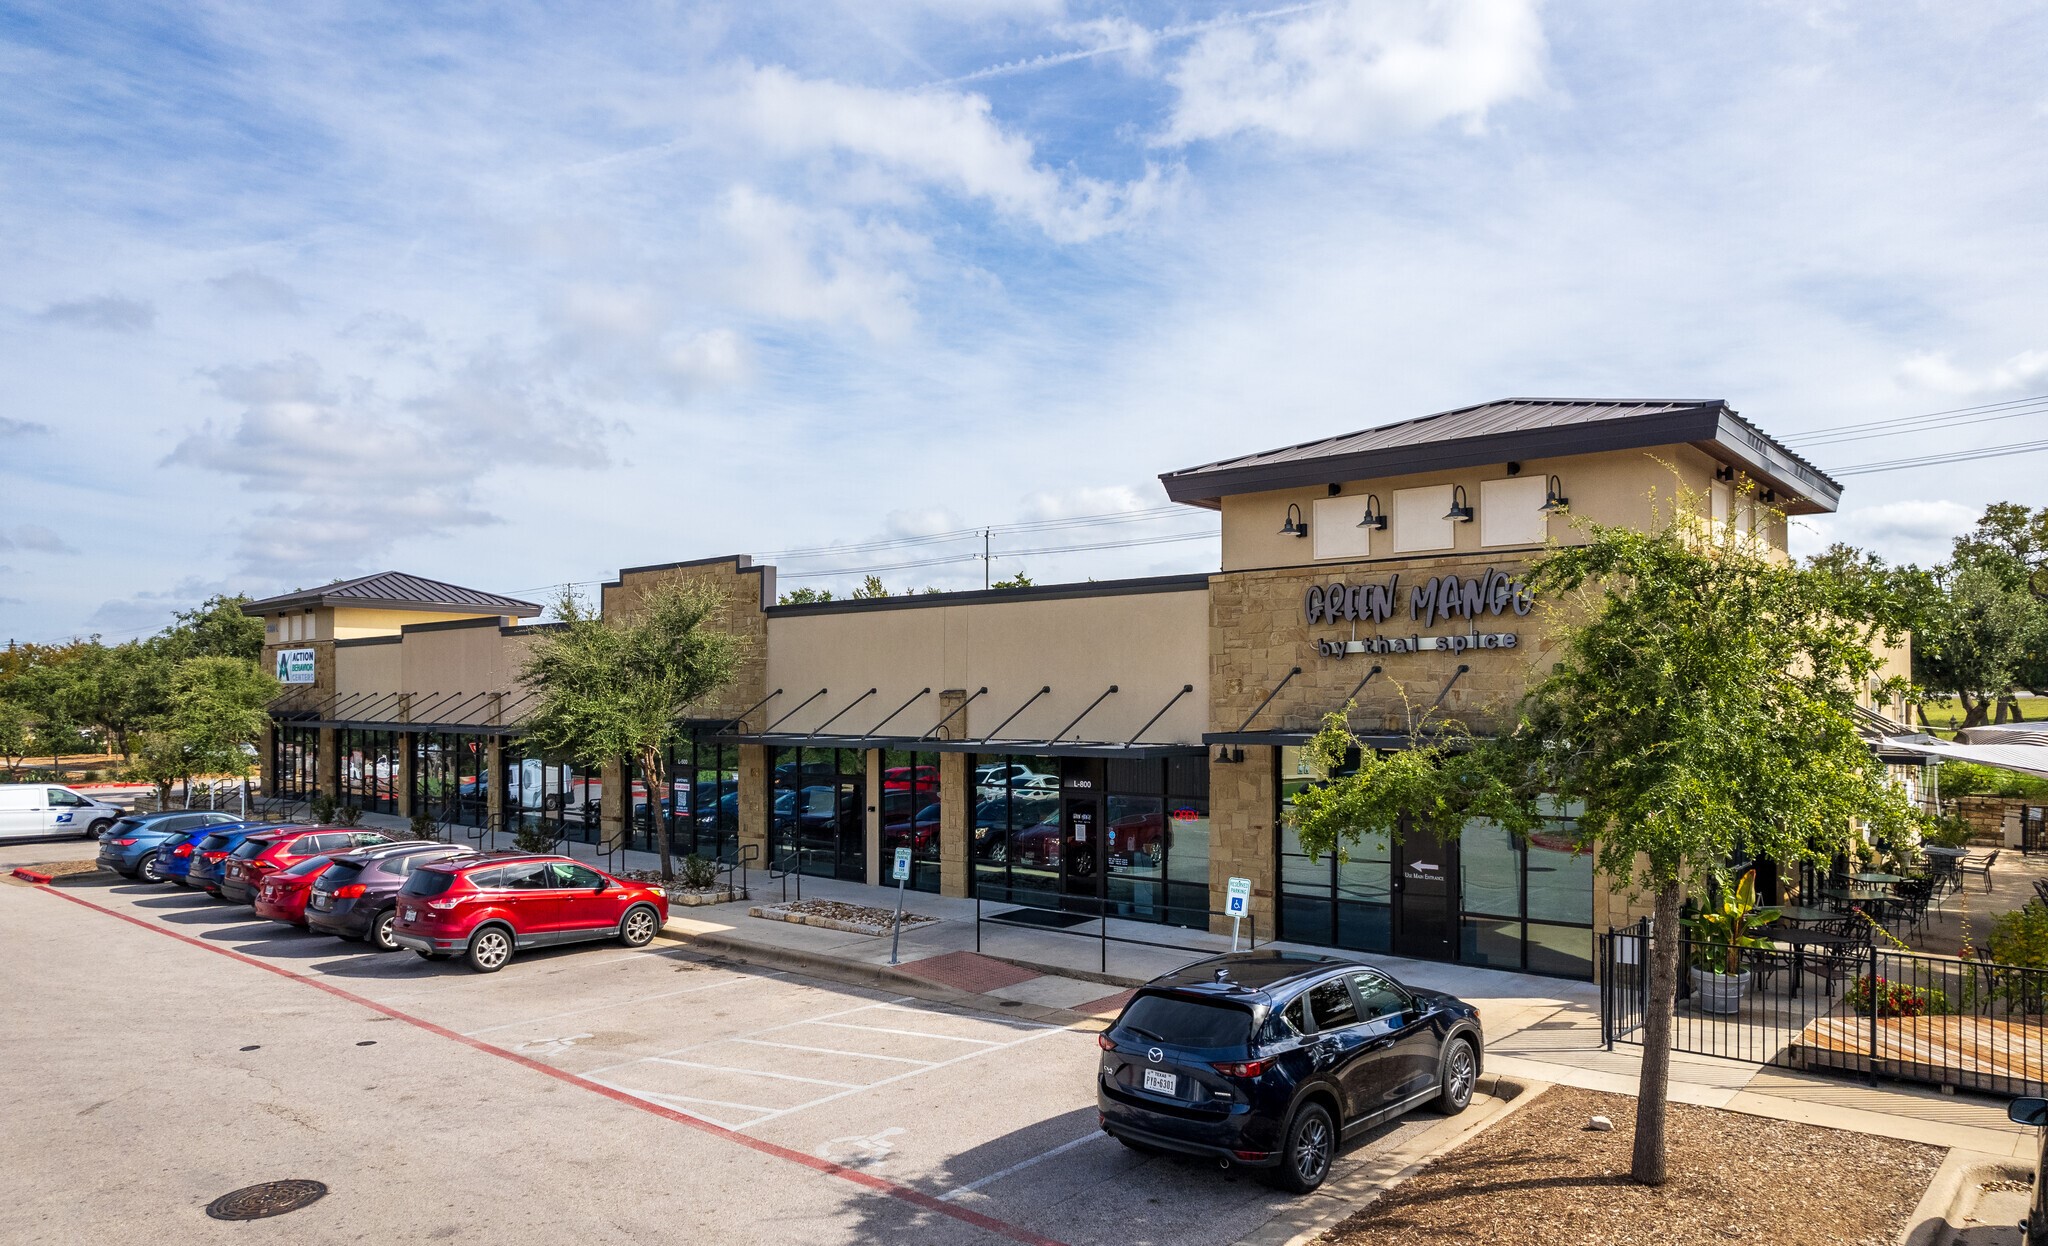 Partners Real Estate arranges lease with frozen yogurt shop, 16 Handles, at Trails at 620 in Austin